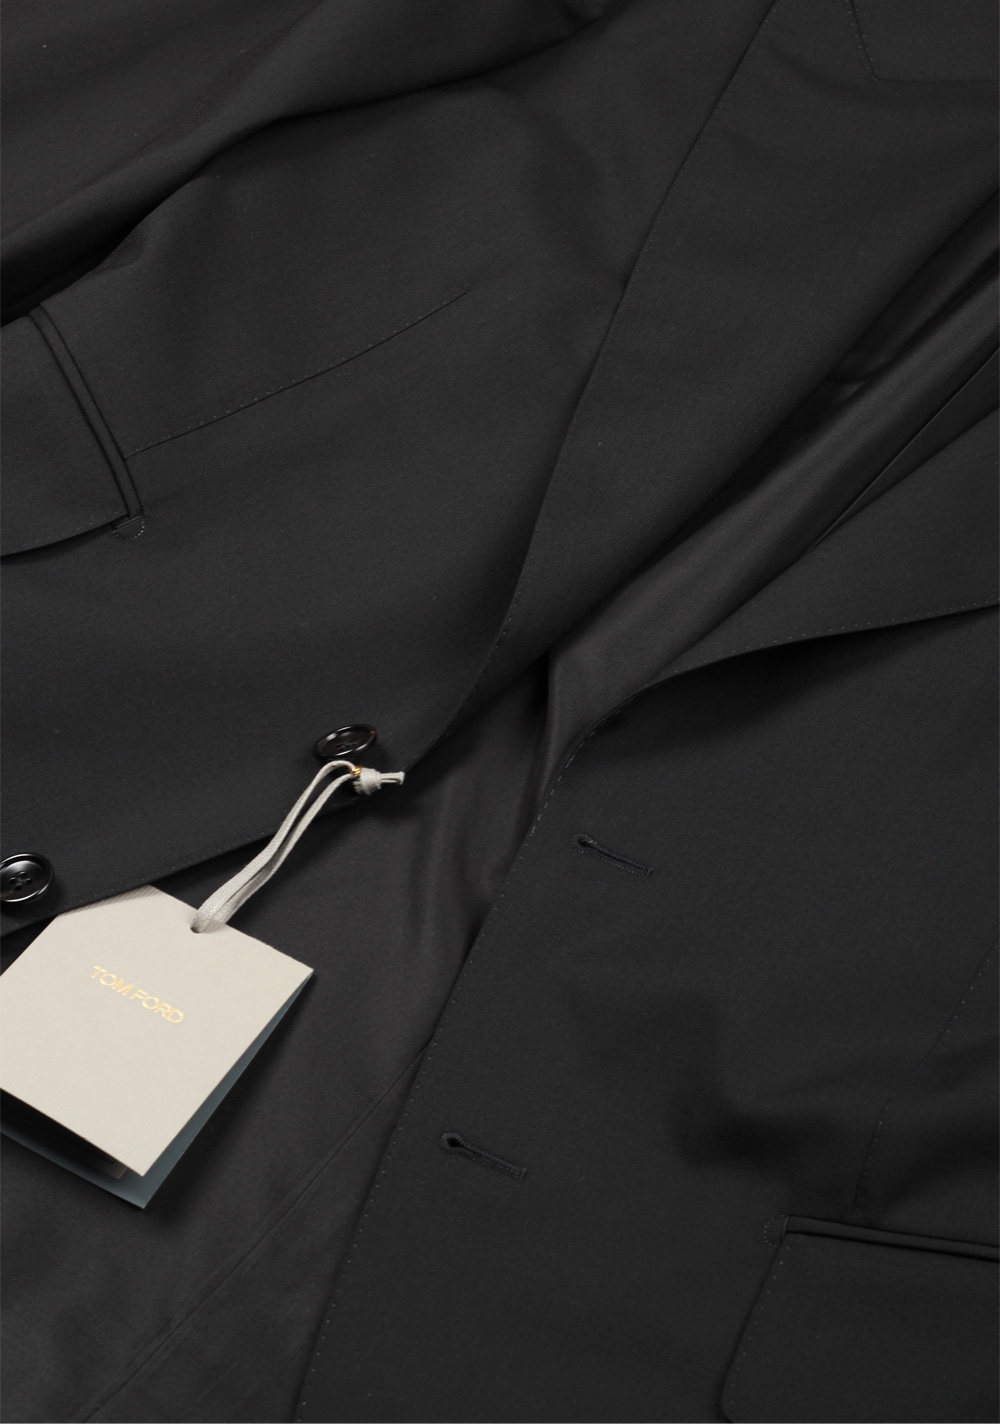 TOM FORD Windsor Black Size 60 / 50R U.S. Wool Fit A | Costume Limité